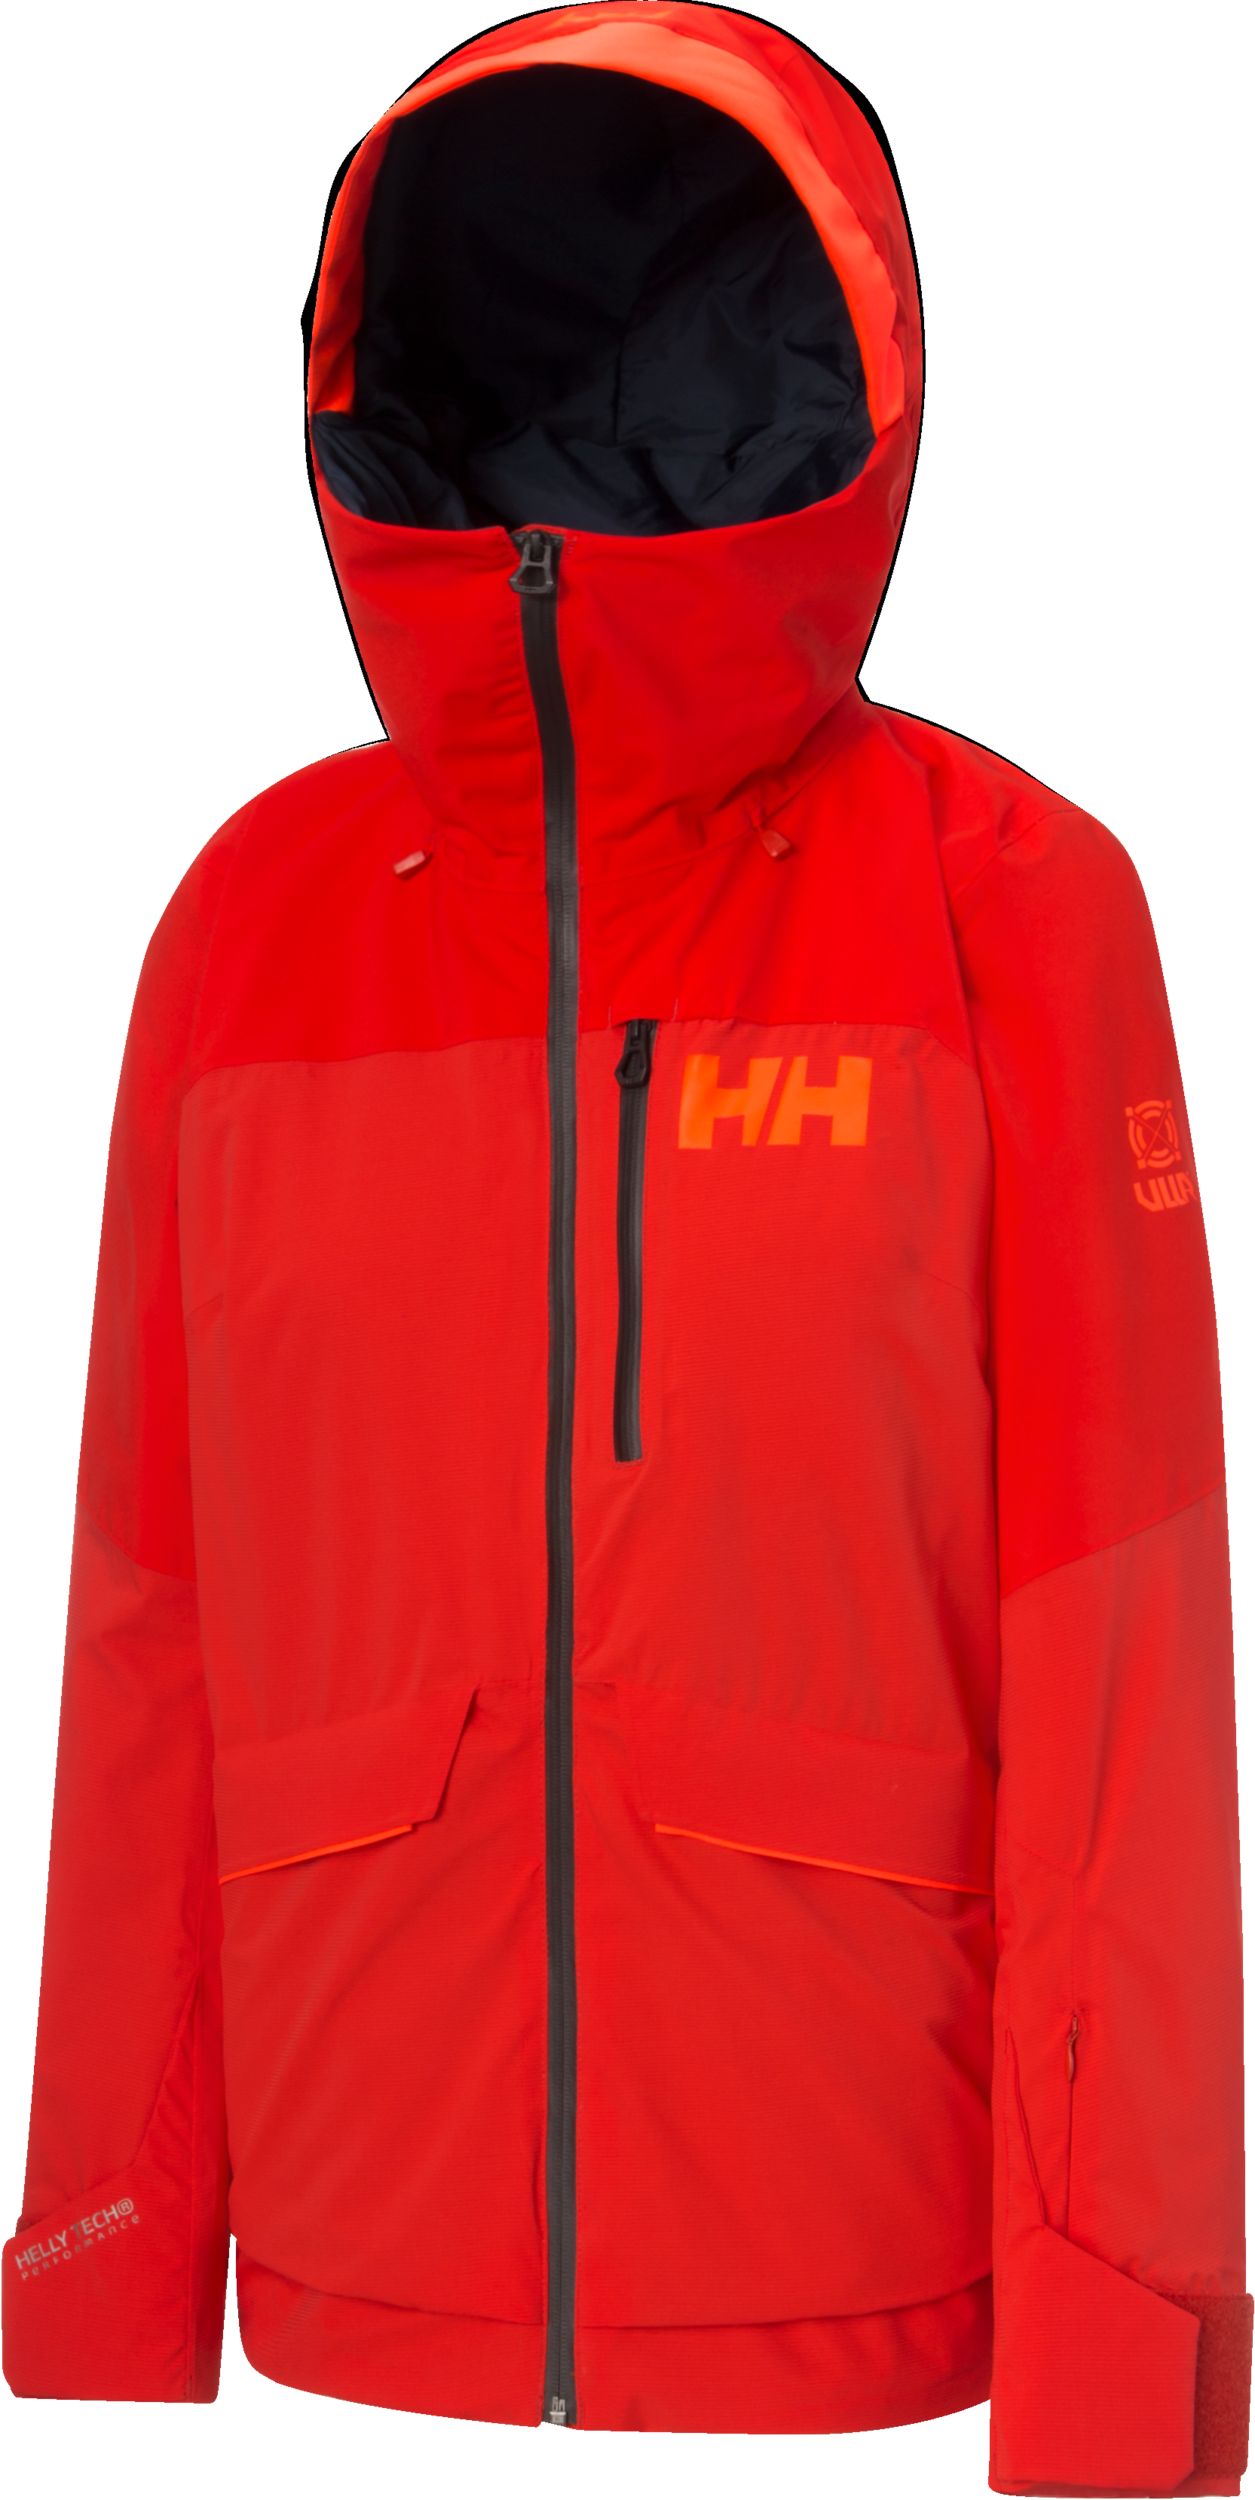 Helly Hansen Kids' Woven Polymer PFD/Life Jacket, Red